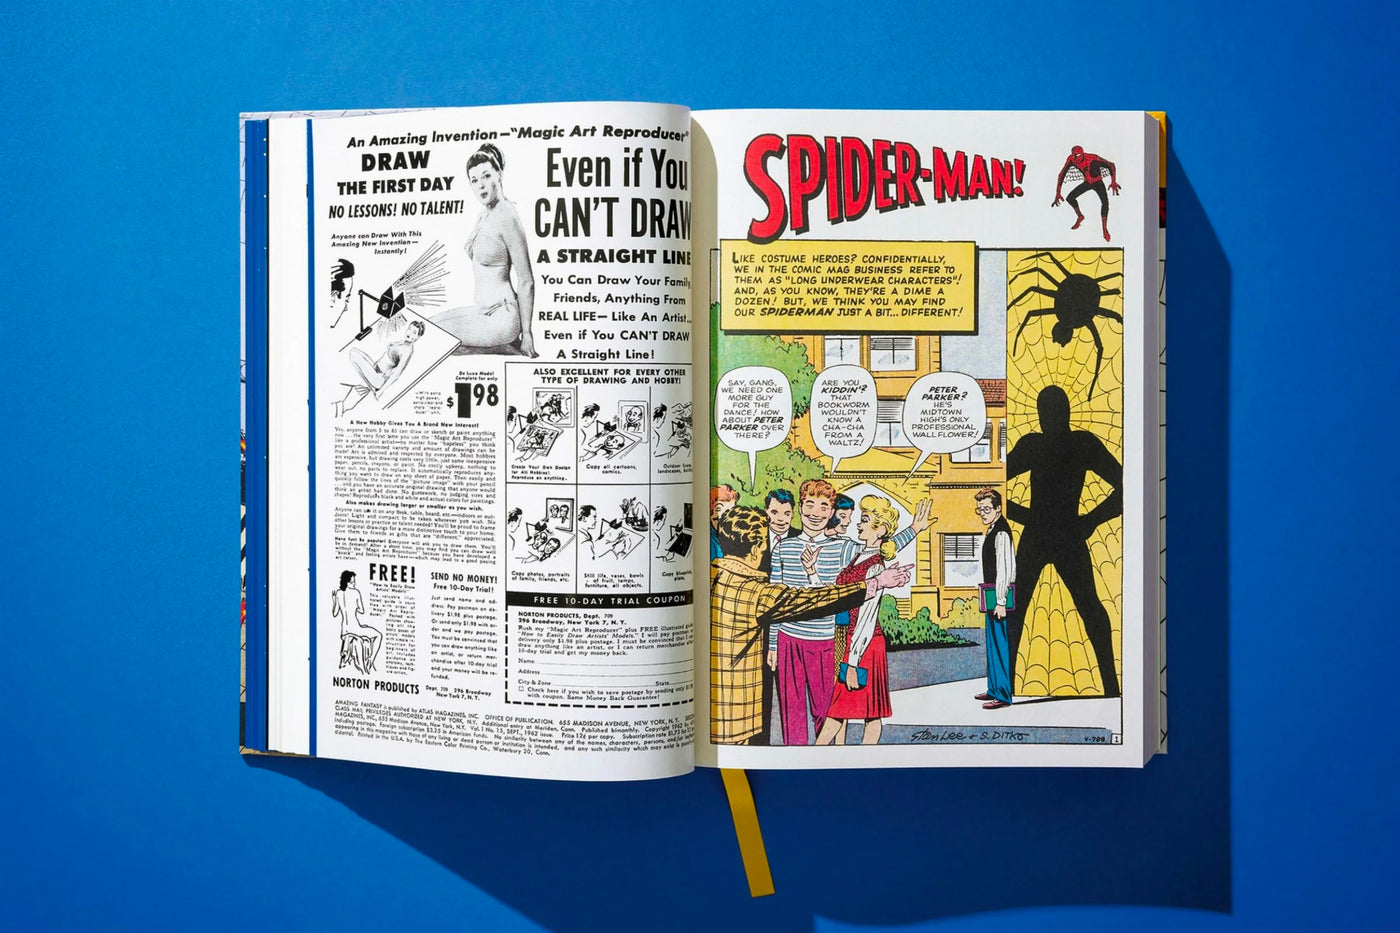 Spider Man Vol. 1 1962-1964, Marvel Comics Library